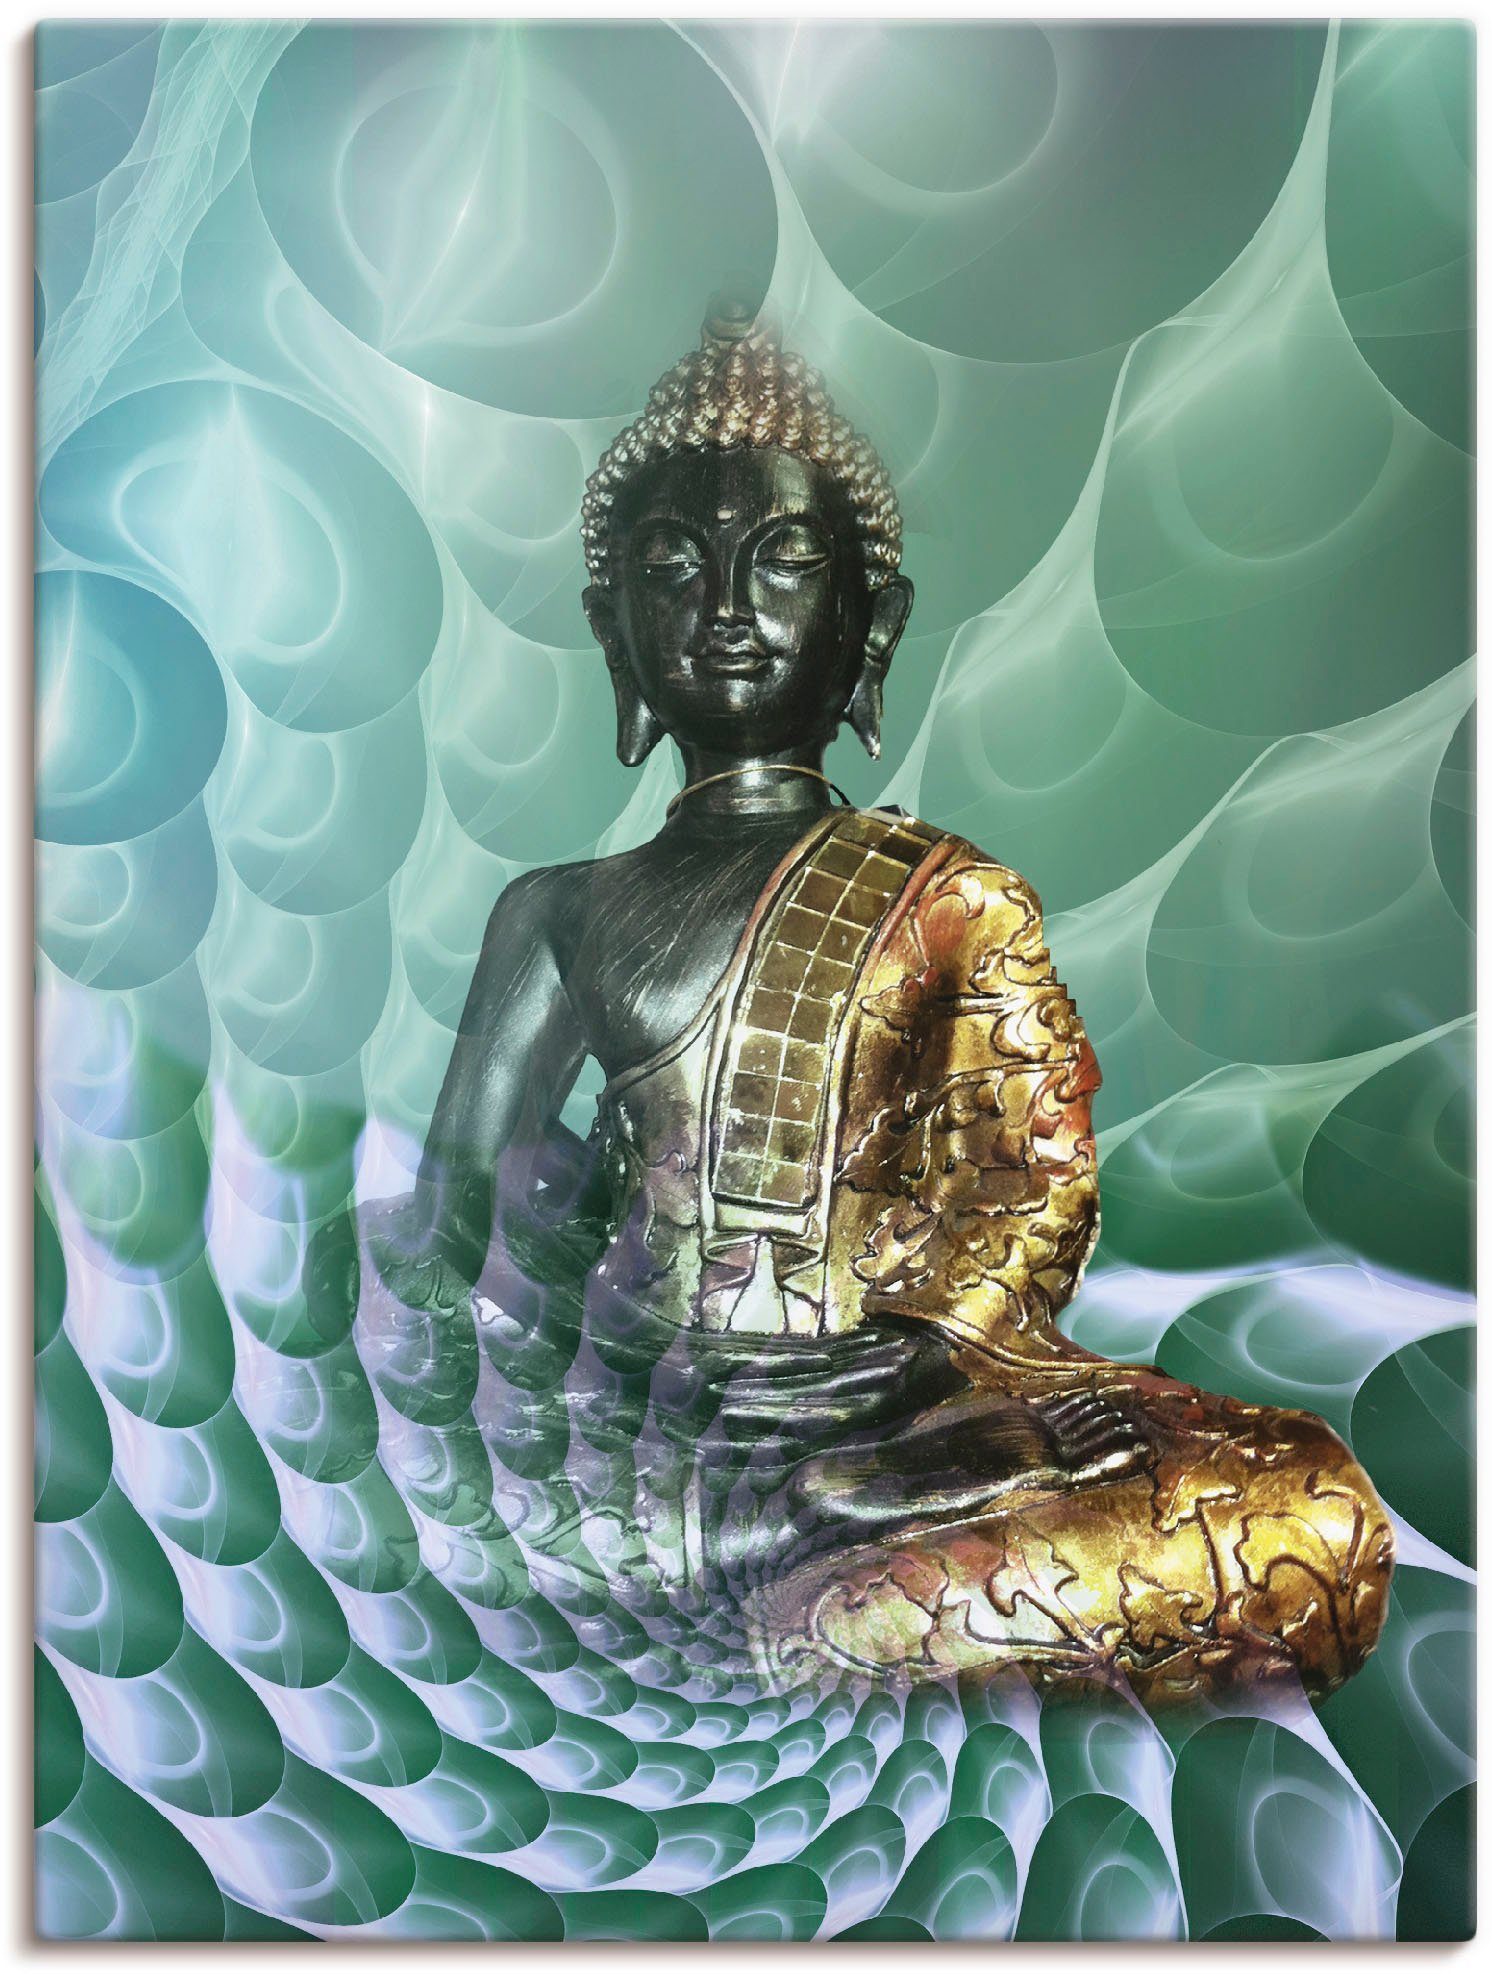 Artland Artprint Boeddha’s droomwereld CB in vele afmetingen & productsoorten - artprint van aluminium / artprint voor buiten, artprint op linnen, poster, muursticker / wandfolie o